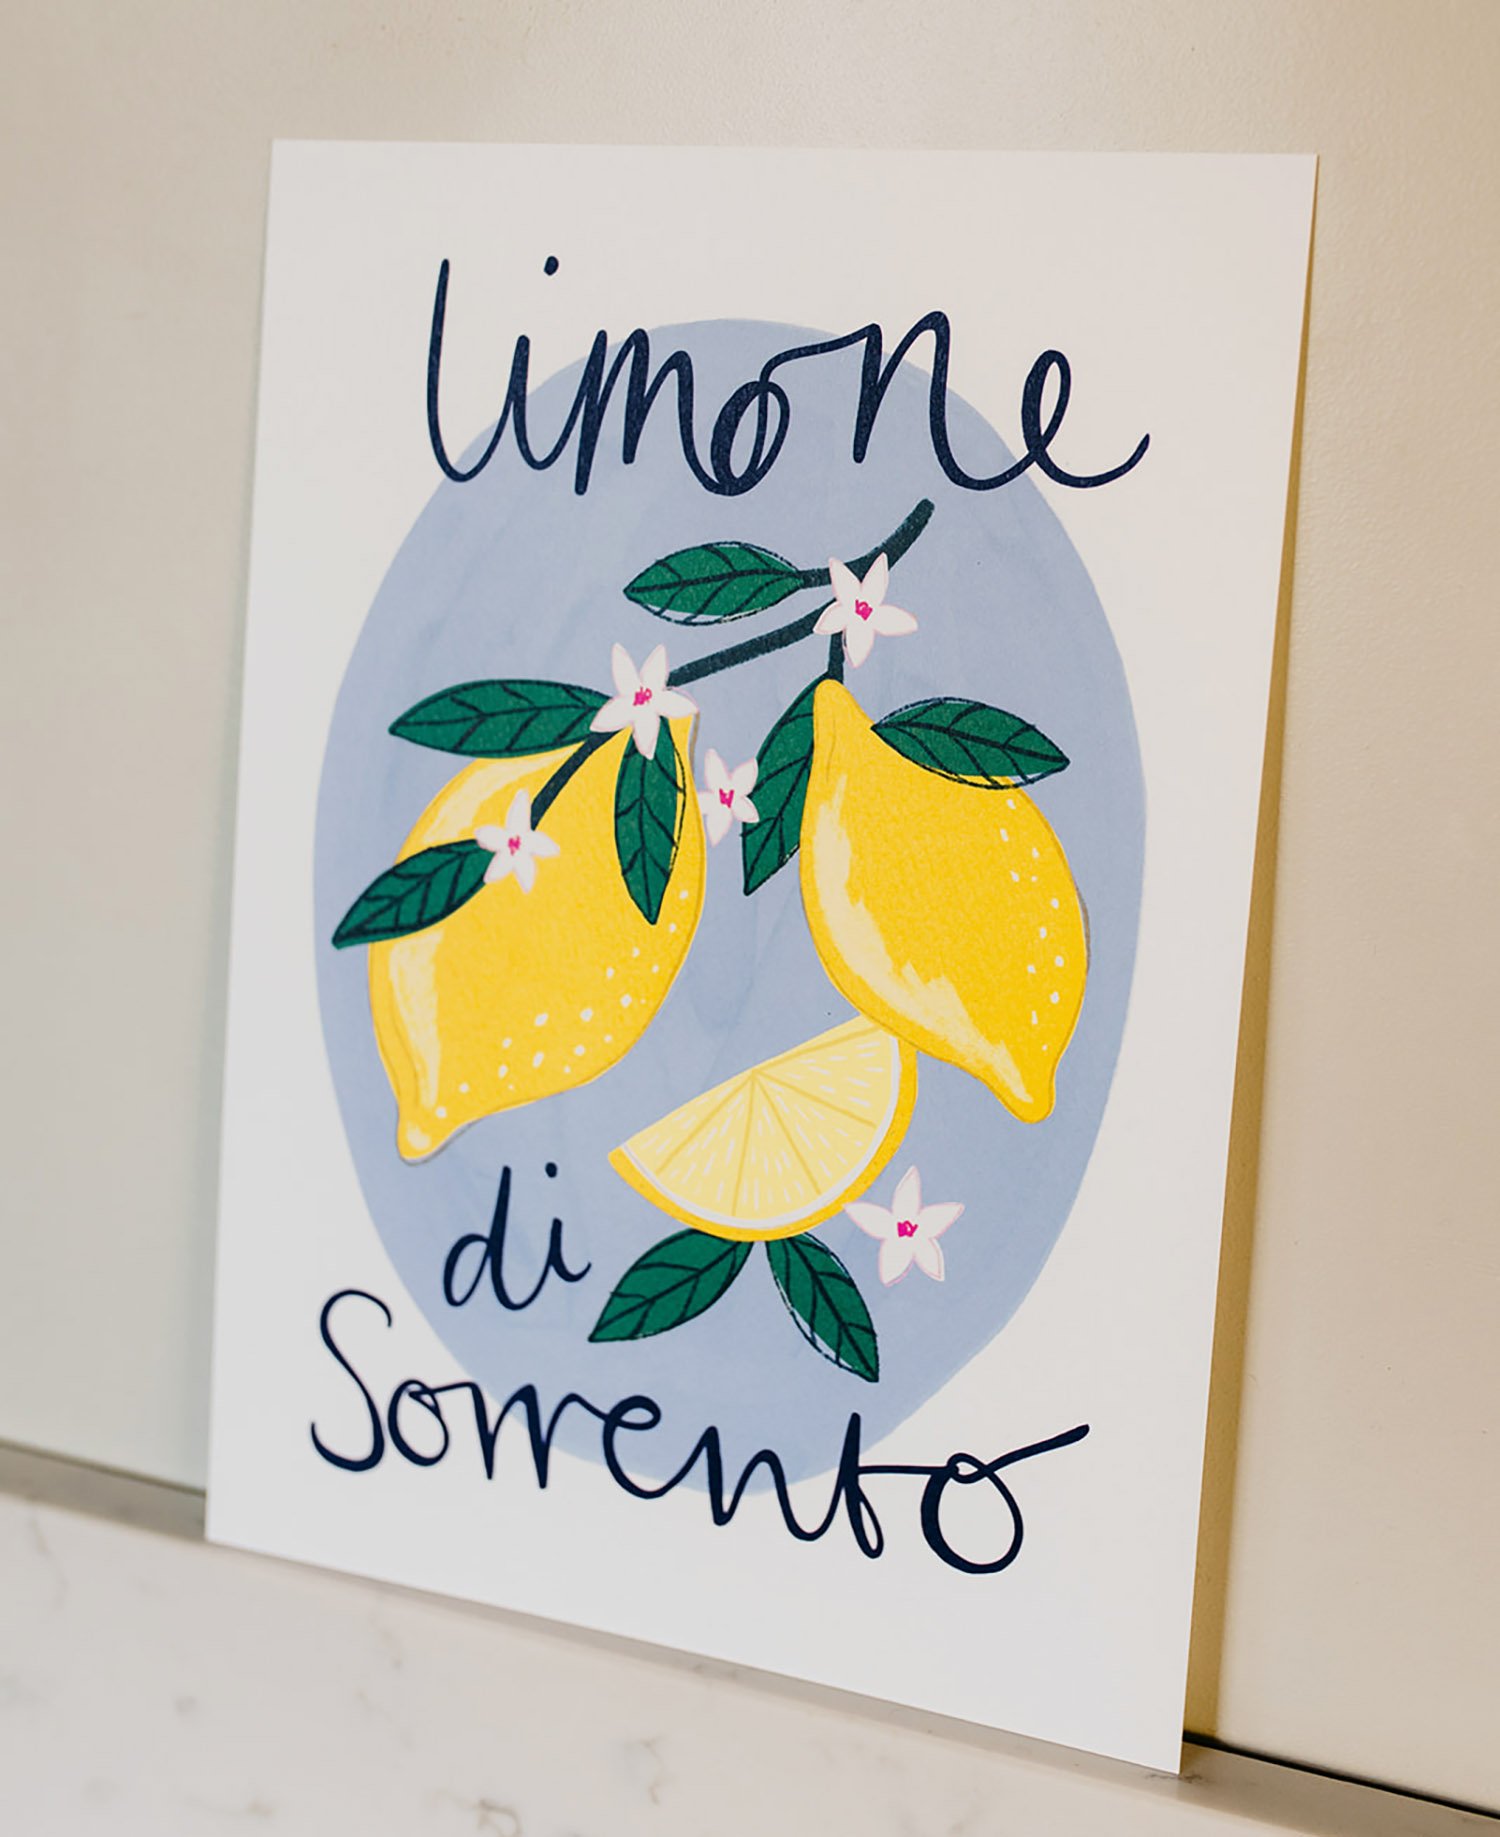 Limone Di Sorrento Art Print